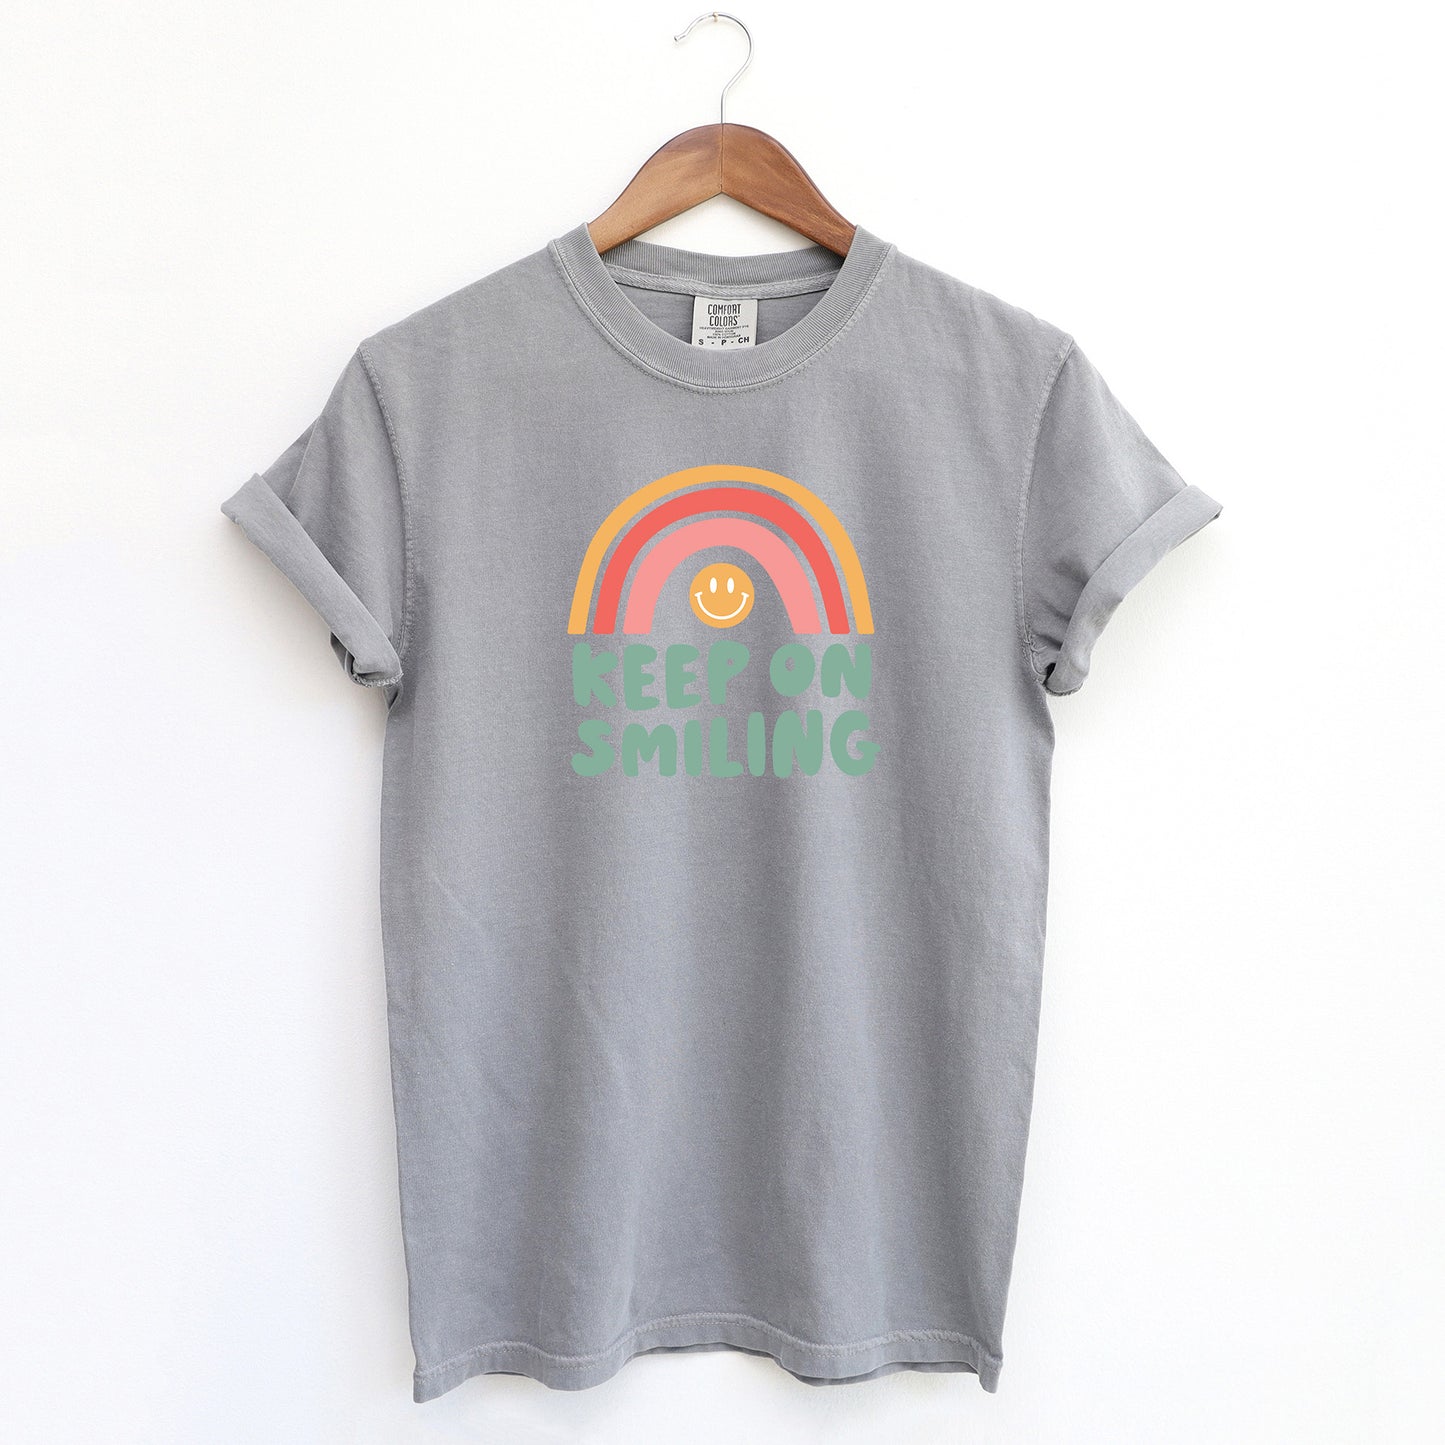 Keep On A Smiling Rainbow | Garment Dyed Short Sleeve Tee